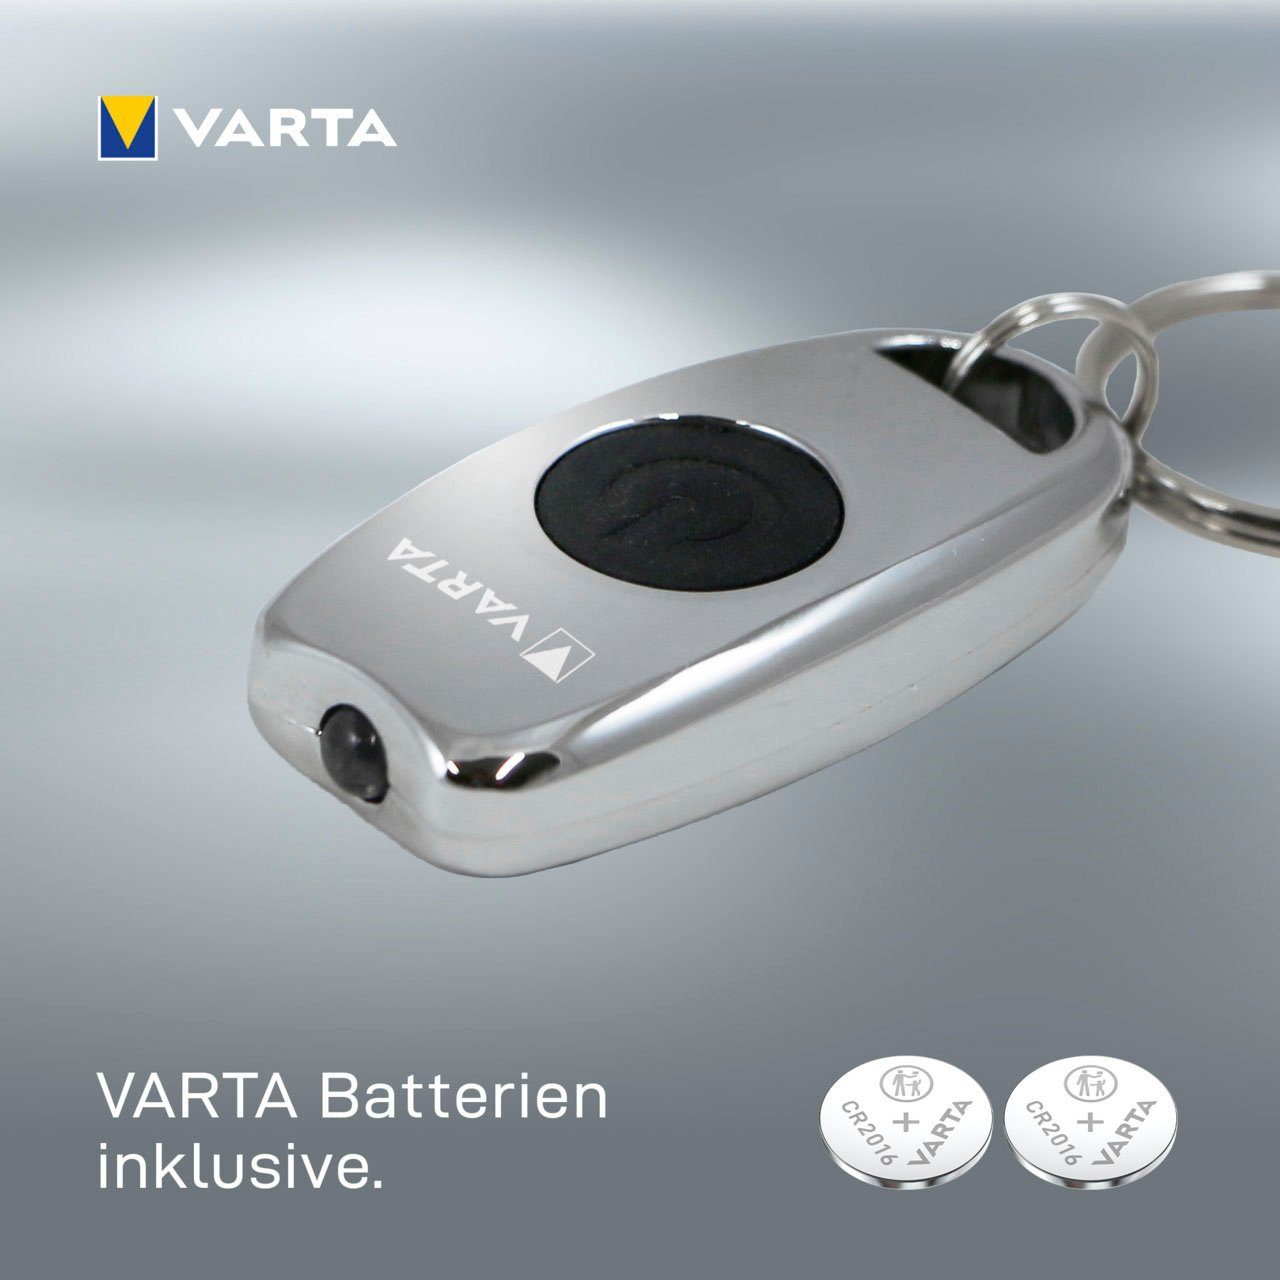 Metal VARTA Chain Key Taschenlampe Light